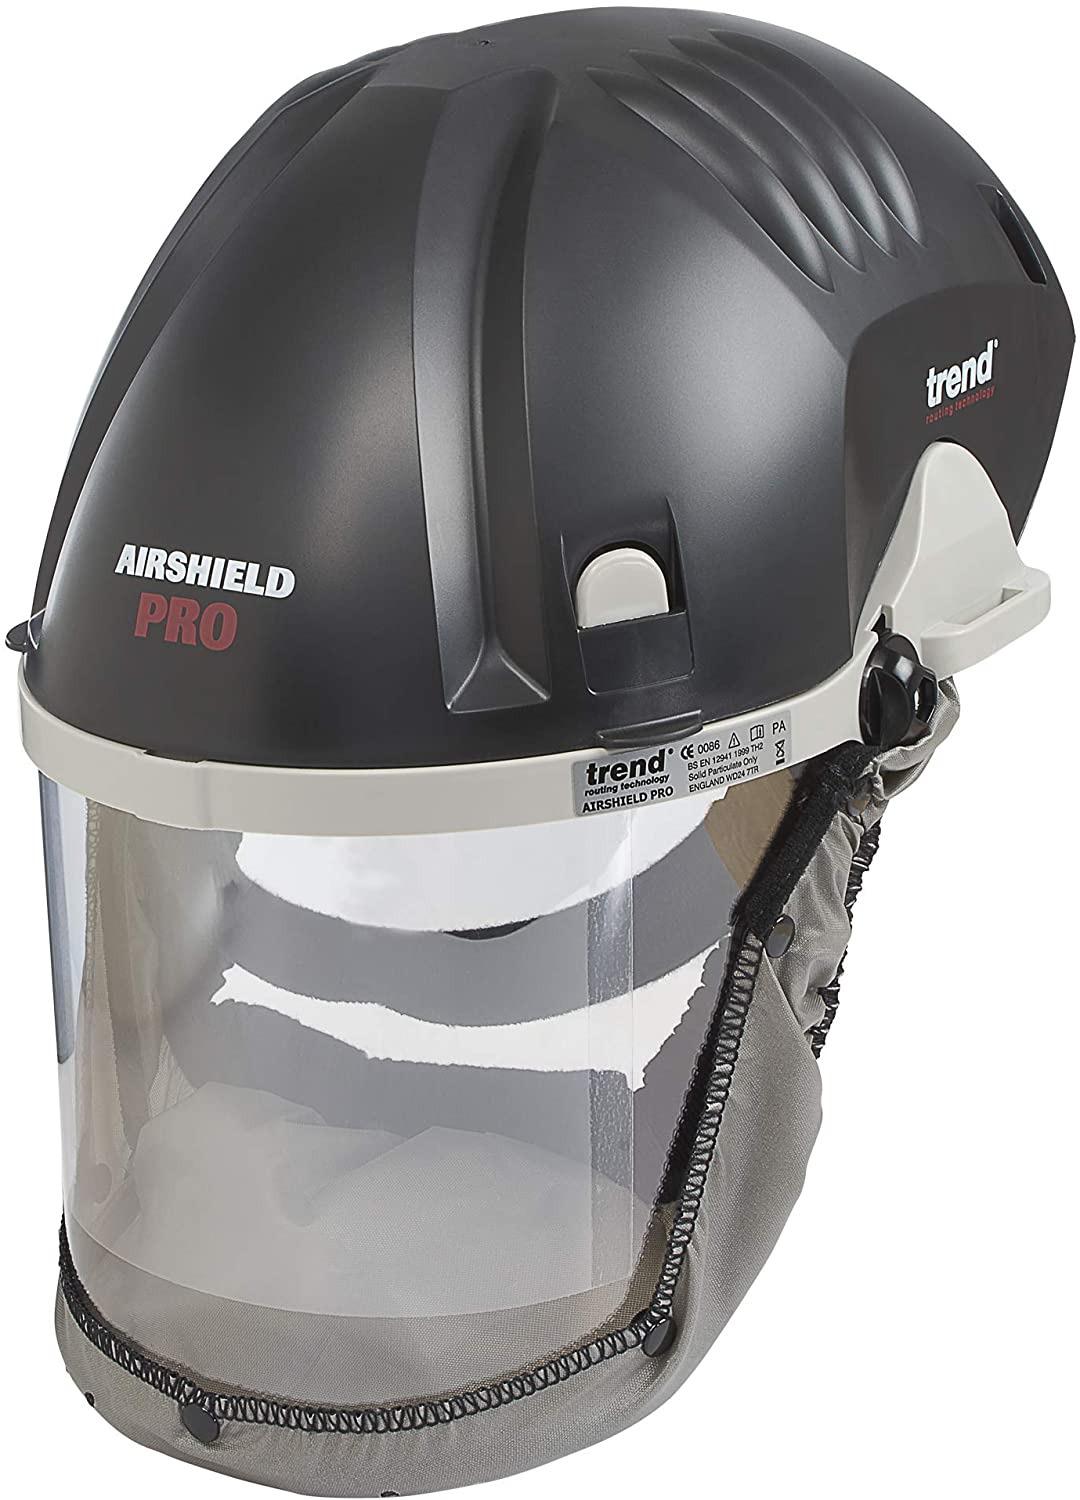 Trend Airshield Pro Full Faceshield, Dust Protector, Battery Powered Air Circula